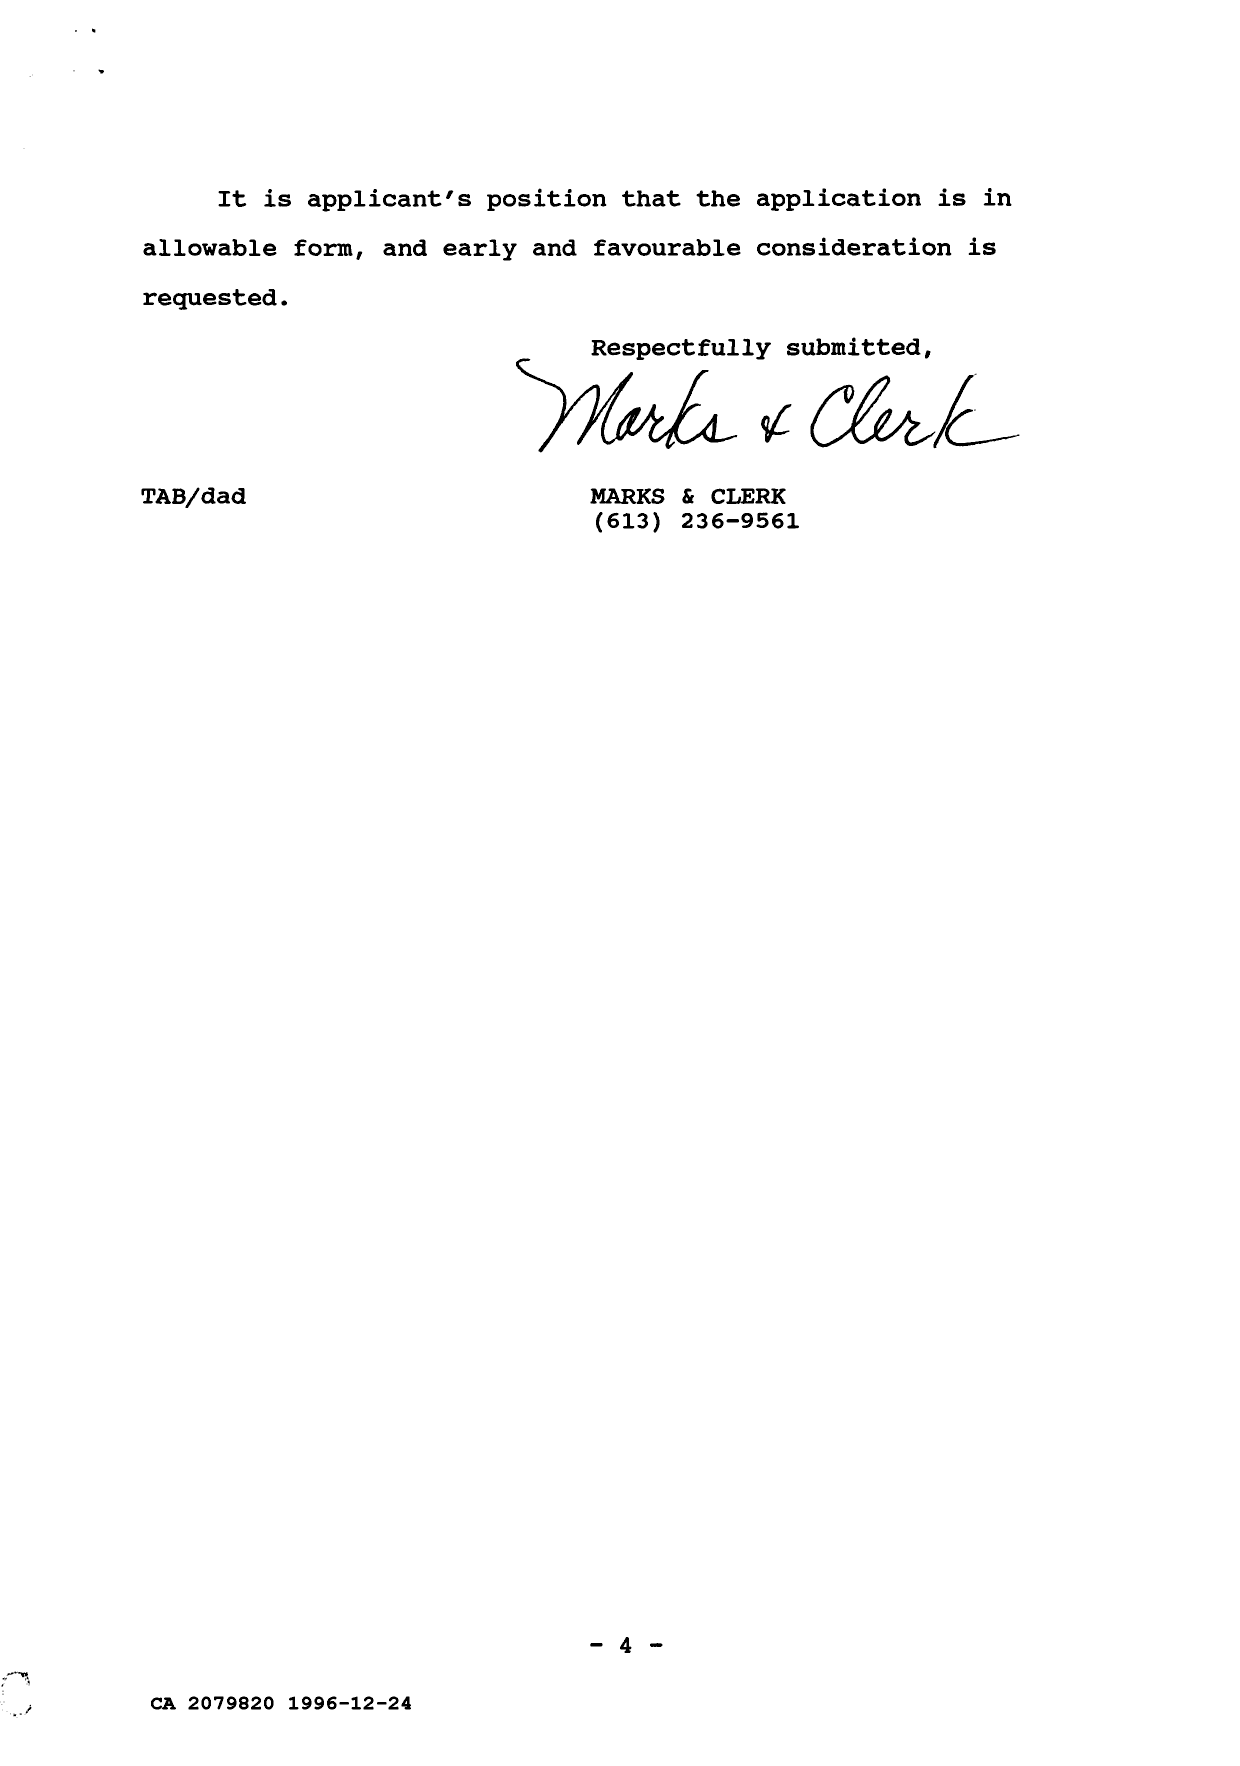 Canadian Patent Document 2079820. Prosecution Correspondence 19961224. Image 4 of 4